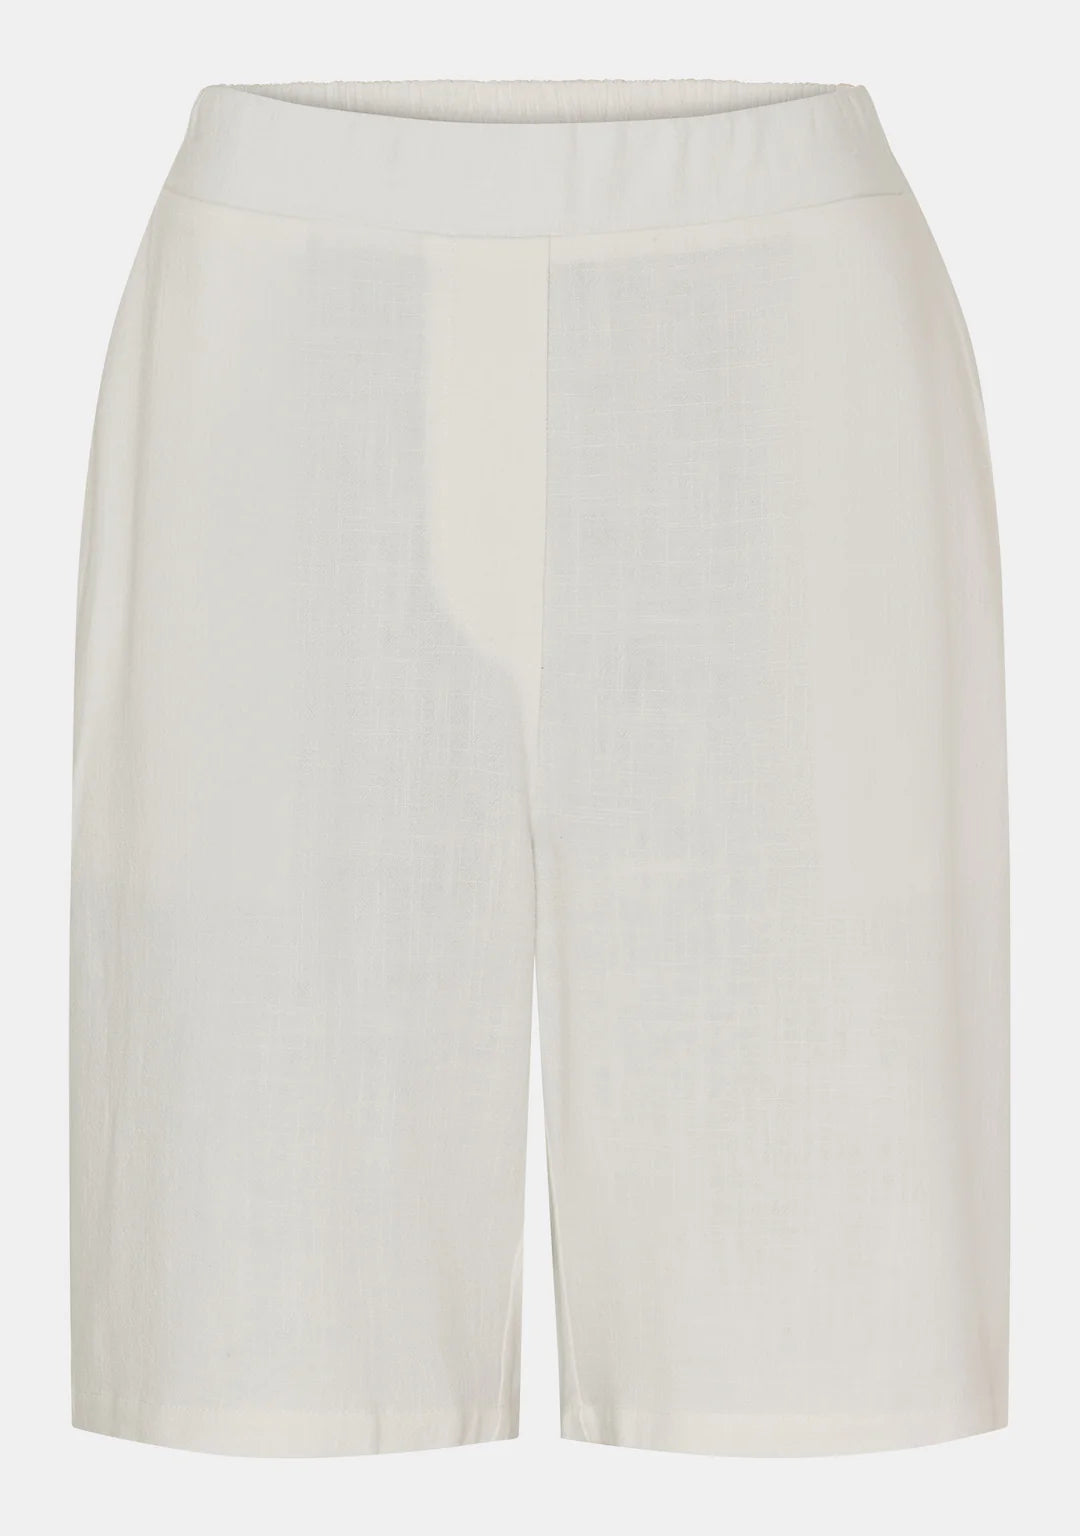 Isay Pearl Shorts - Broken White